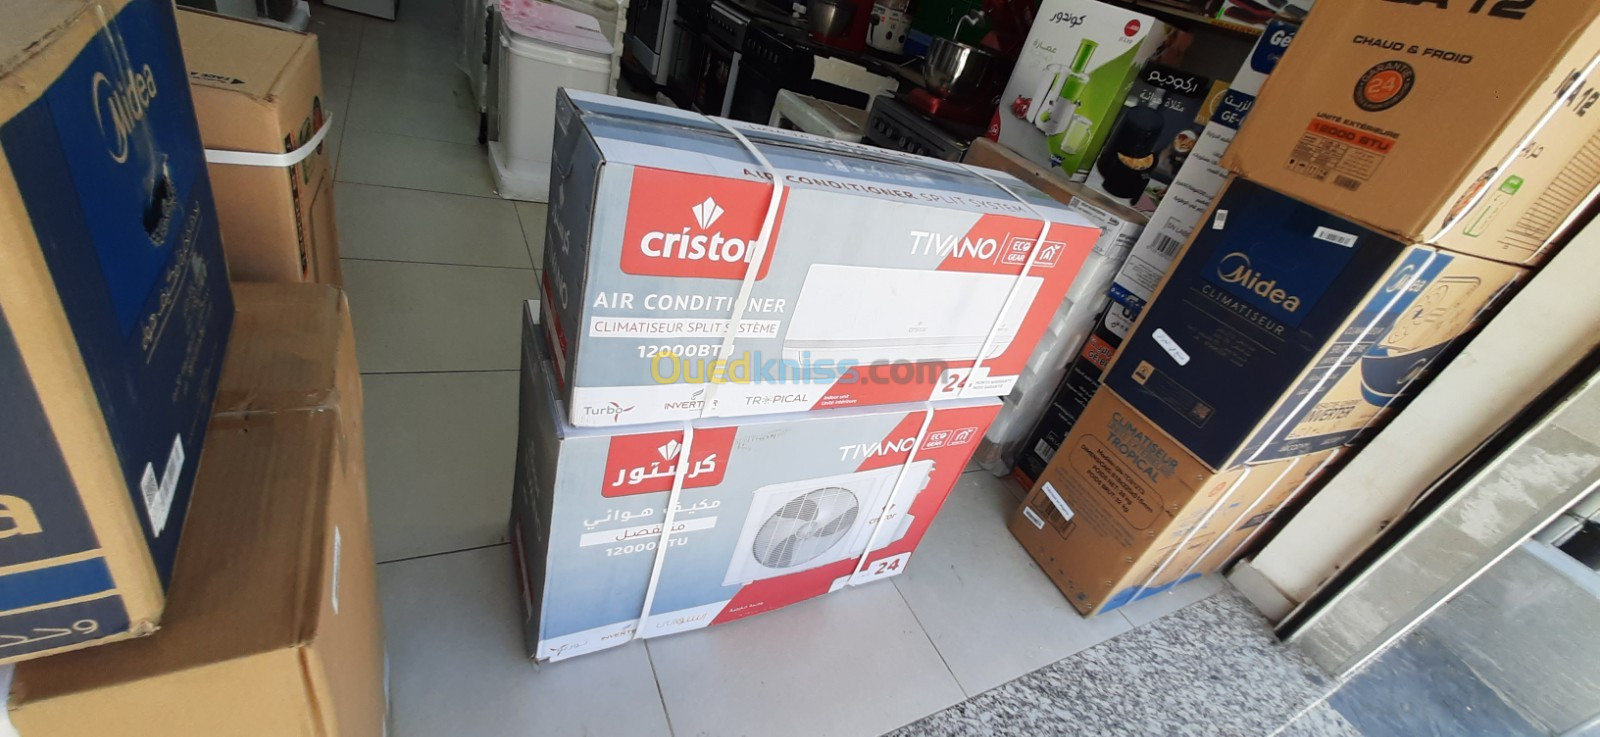 promotion climatiseur cristor 12000btu tivano inverter tropical T3